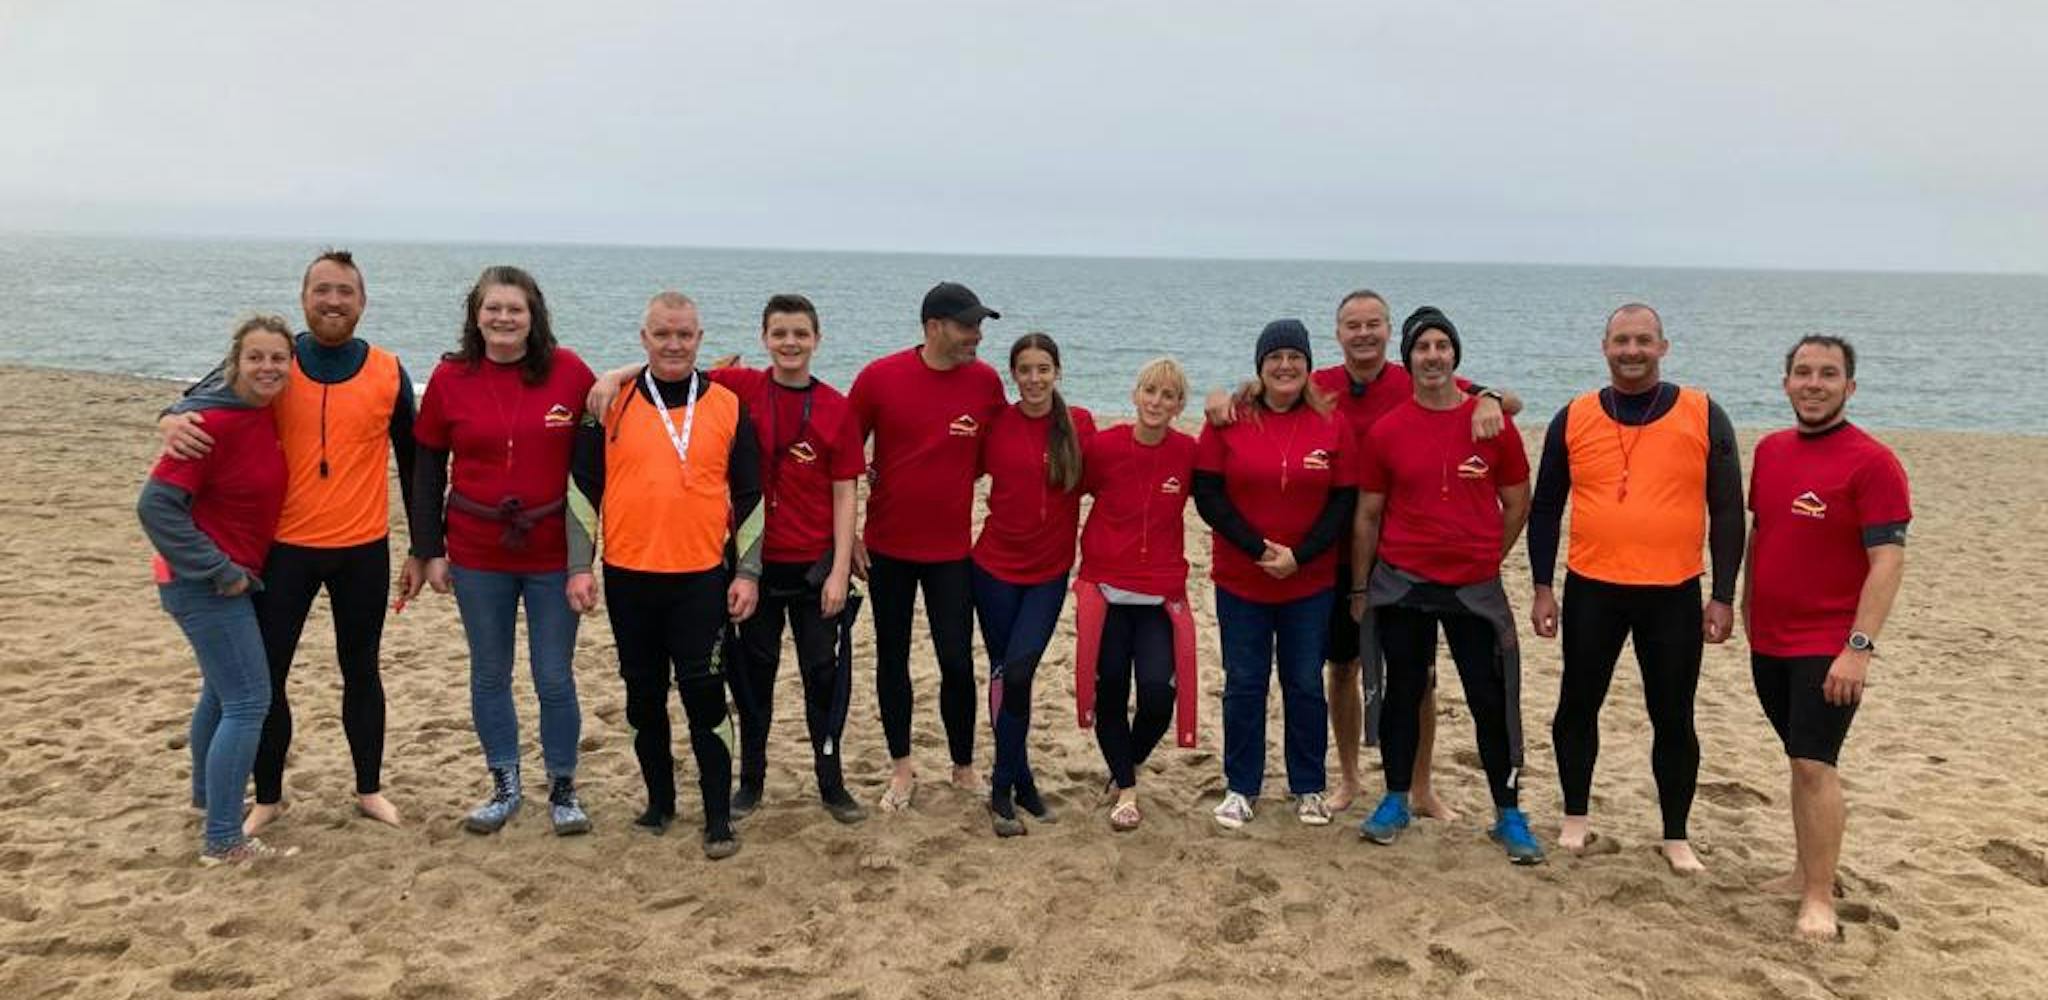 Carlyon Bay Surf Life Saving Club volunteers